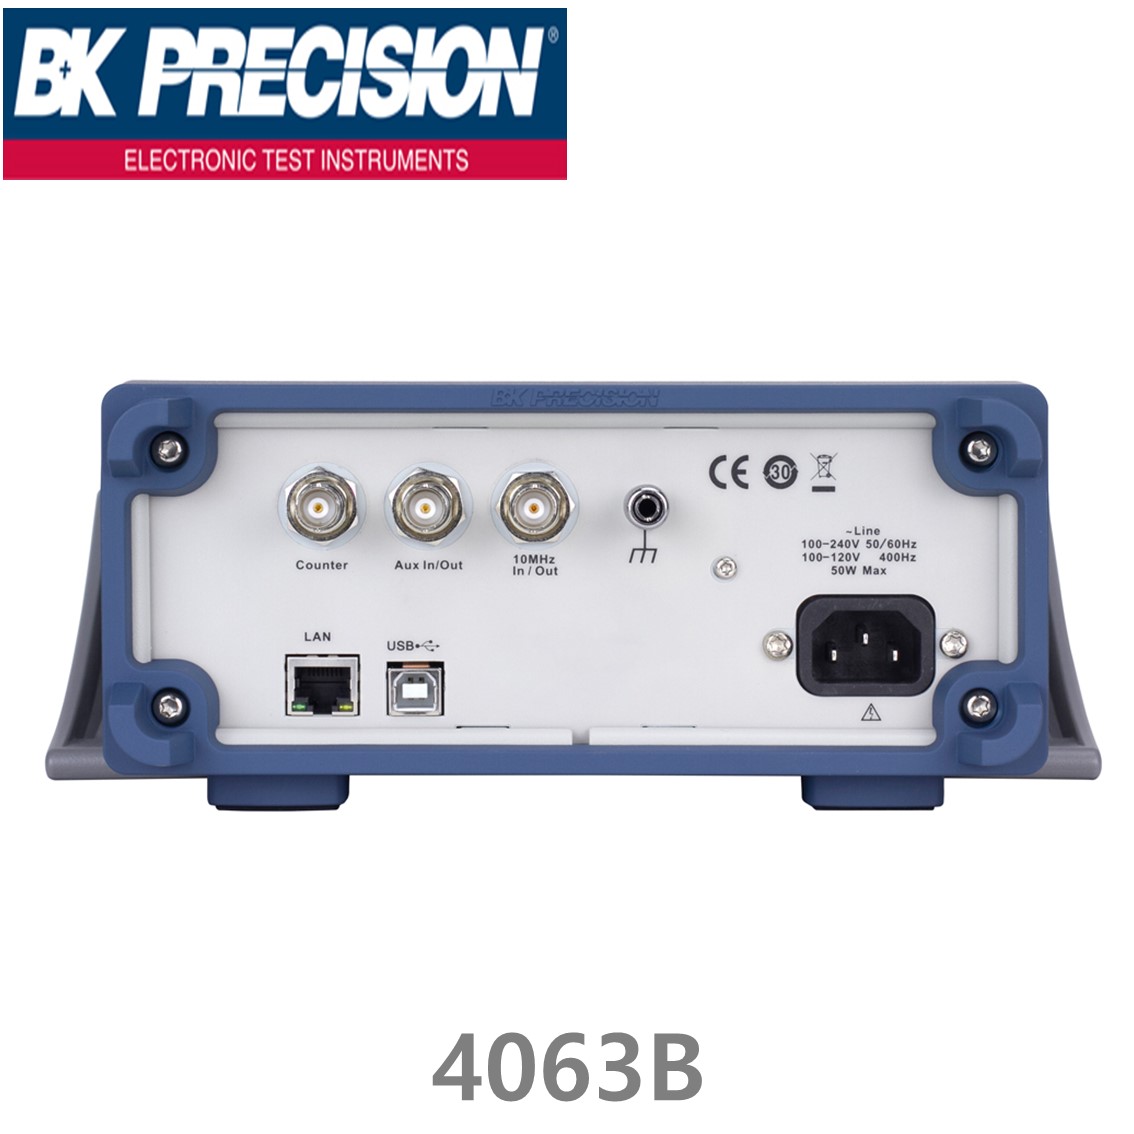 [ BK PRECISION ] BK 4063B, 80MHz Dual Channel Function Arbitrary Waveform Generators, 임의 파형 발생기, B&K 4063B